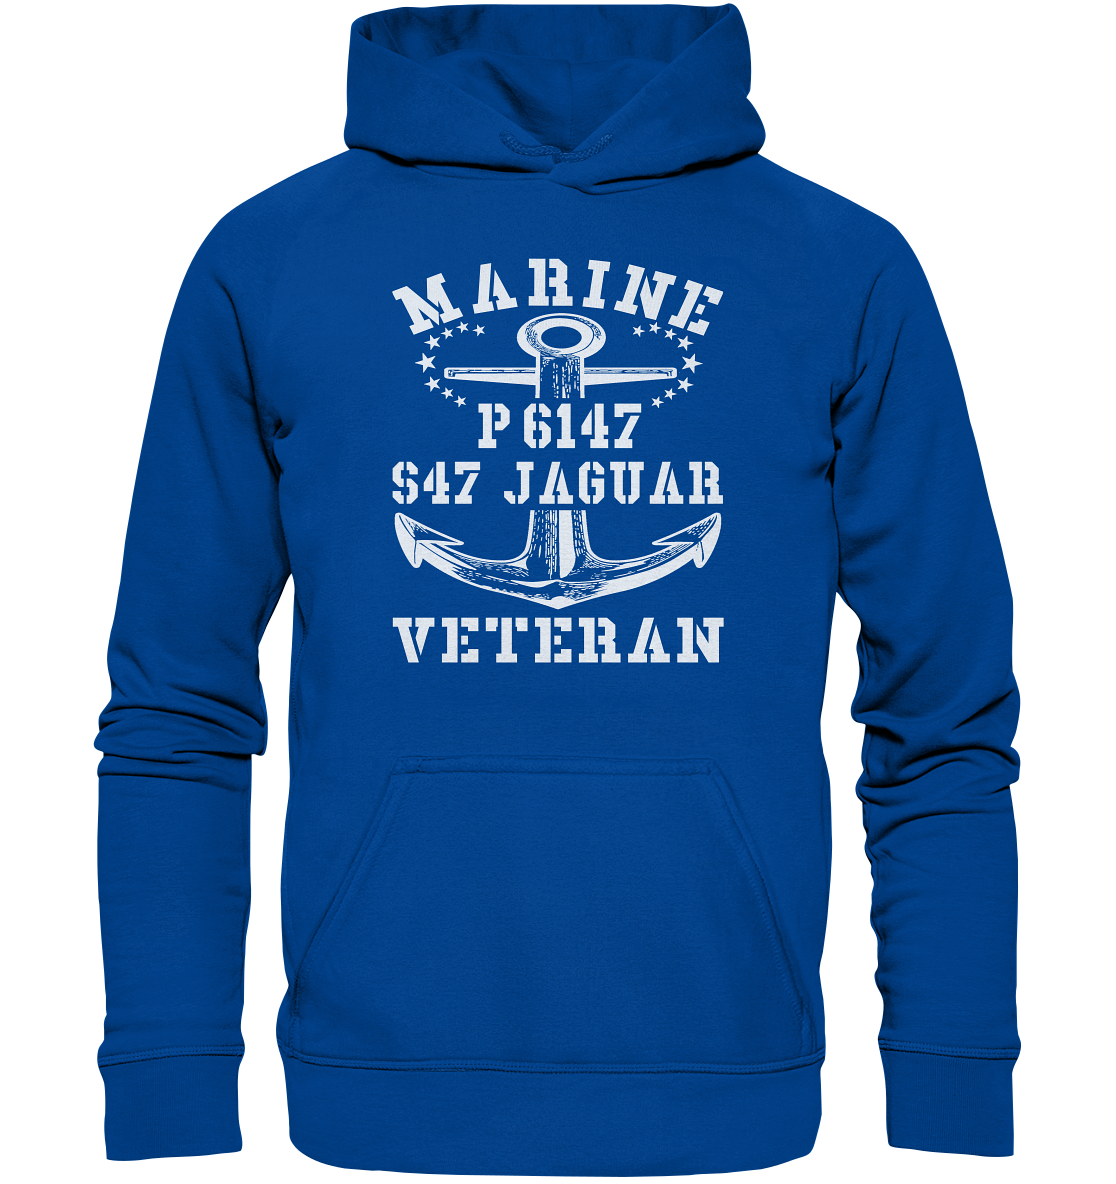 P6147 S47 JAGUAR Marine Veteran - Basic Unisex Hoodie